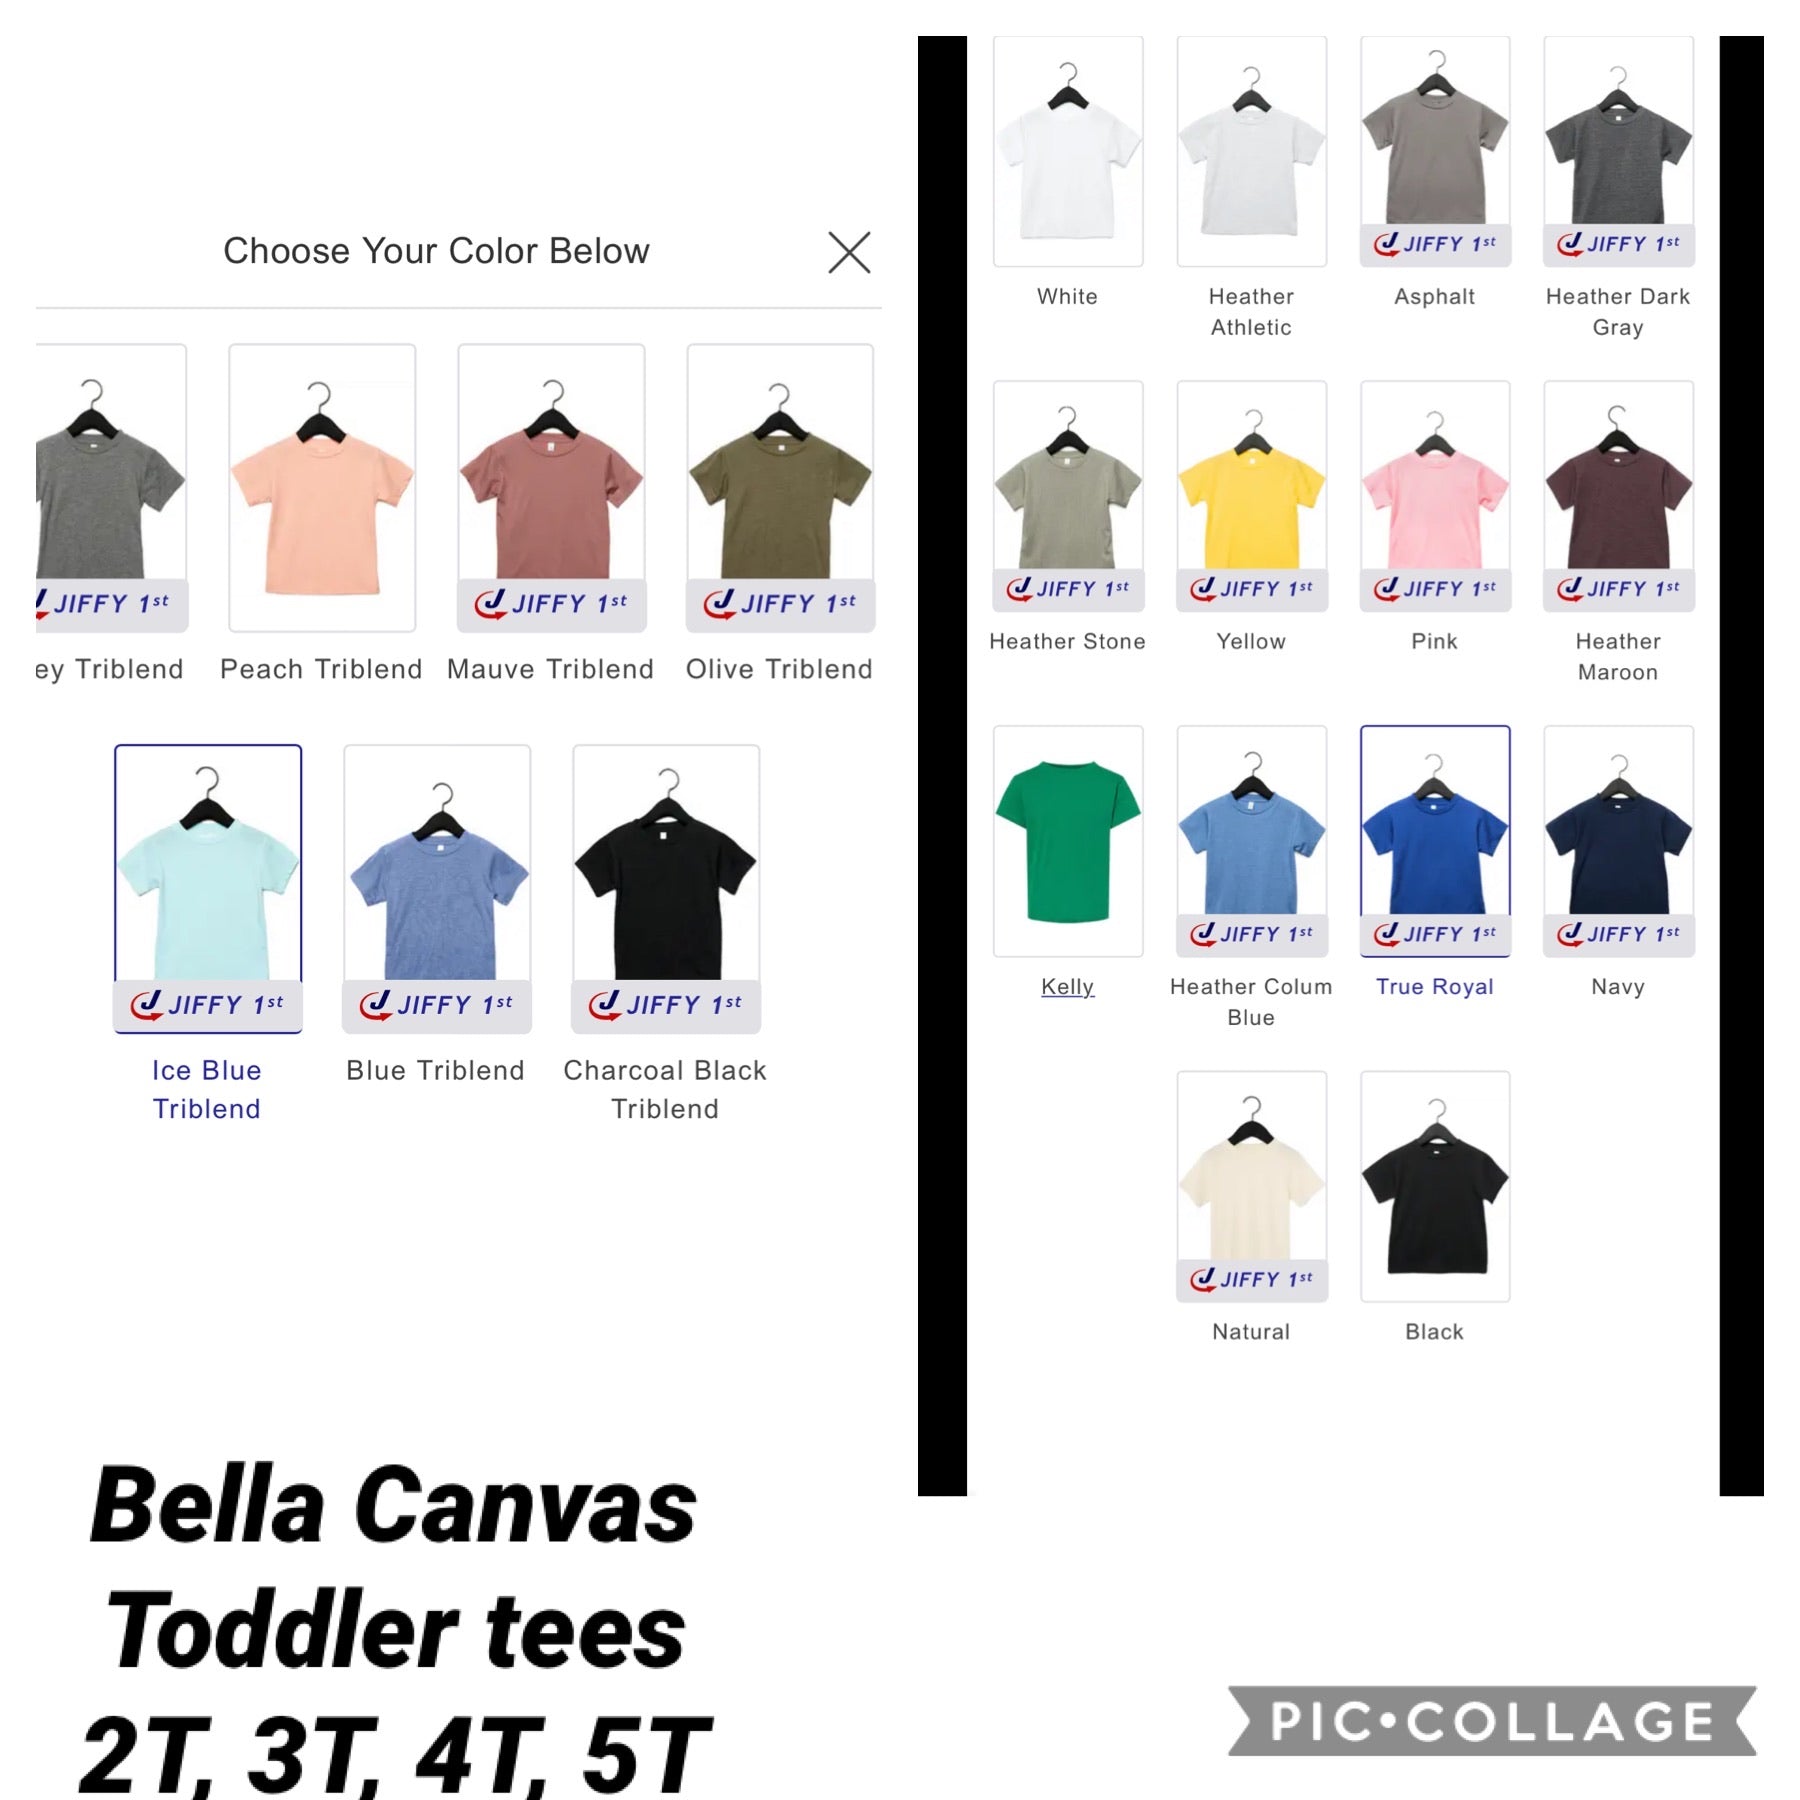 Bella Canvas Kids Brand (FREE)